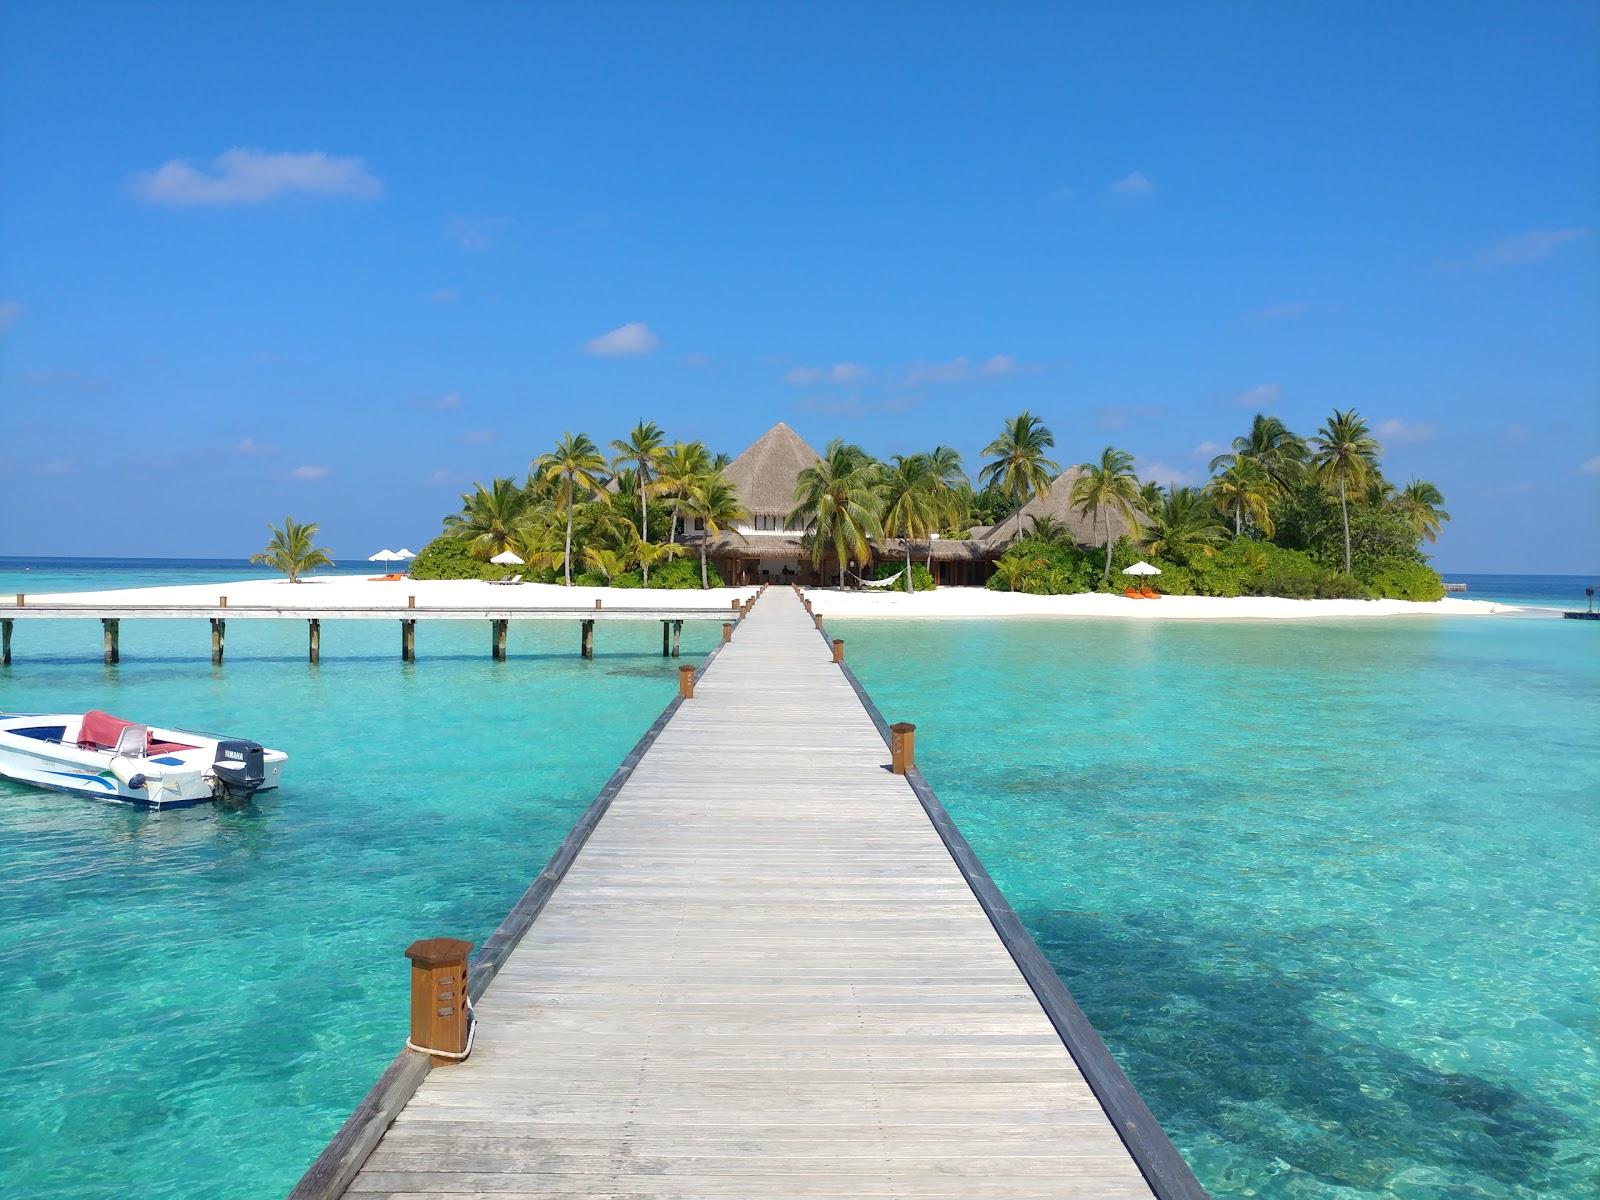 Photo of Mirihi Resort Island - popular place among relax connoisseurs